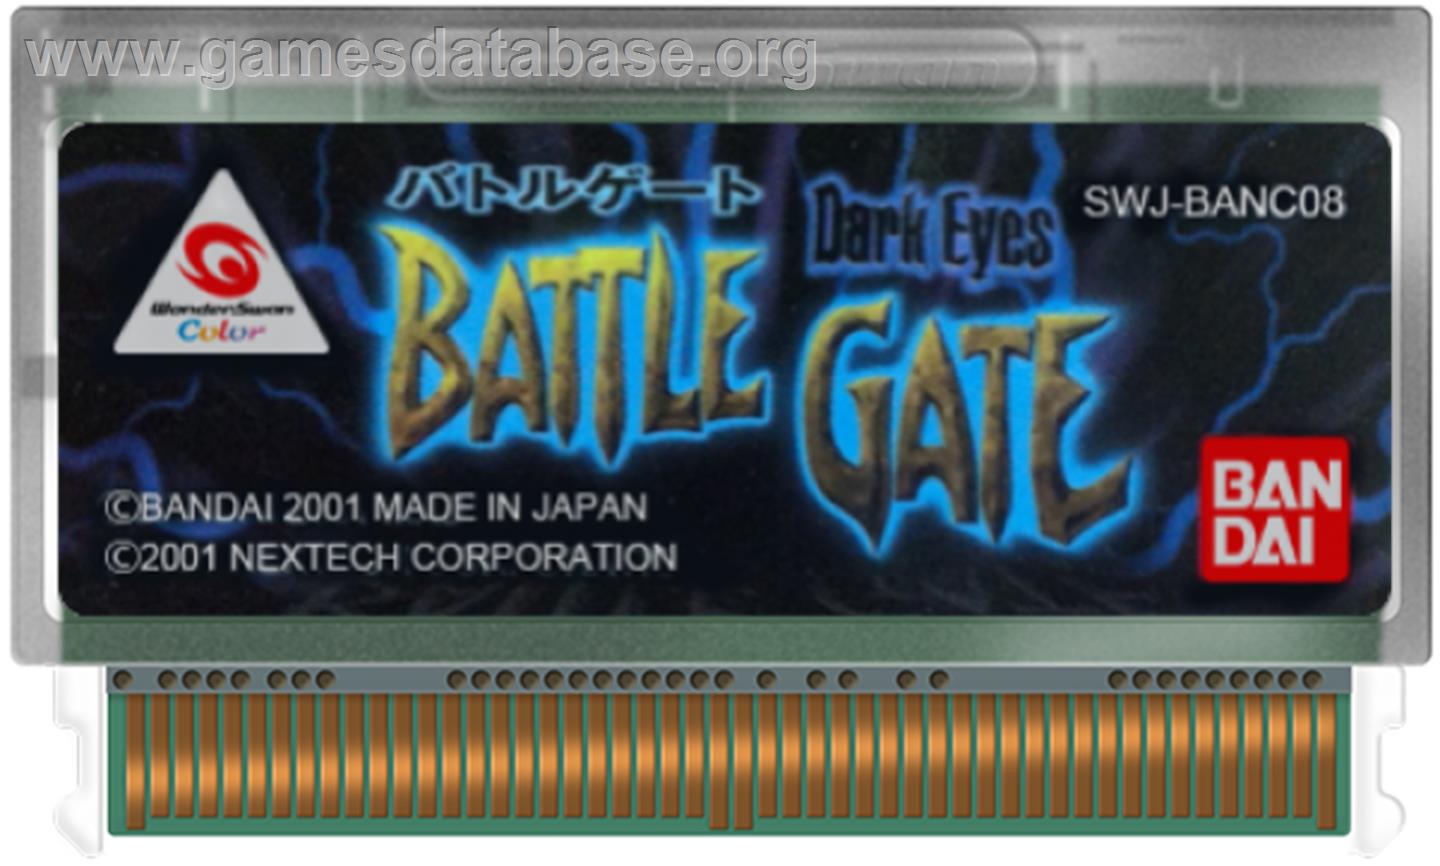 Dark Eyes: Battle Gate - Bandai WonderSwan Color - Artwork - Cartridge